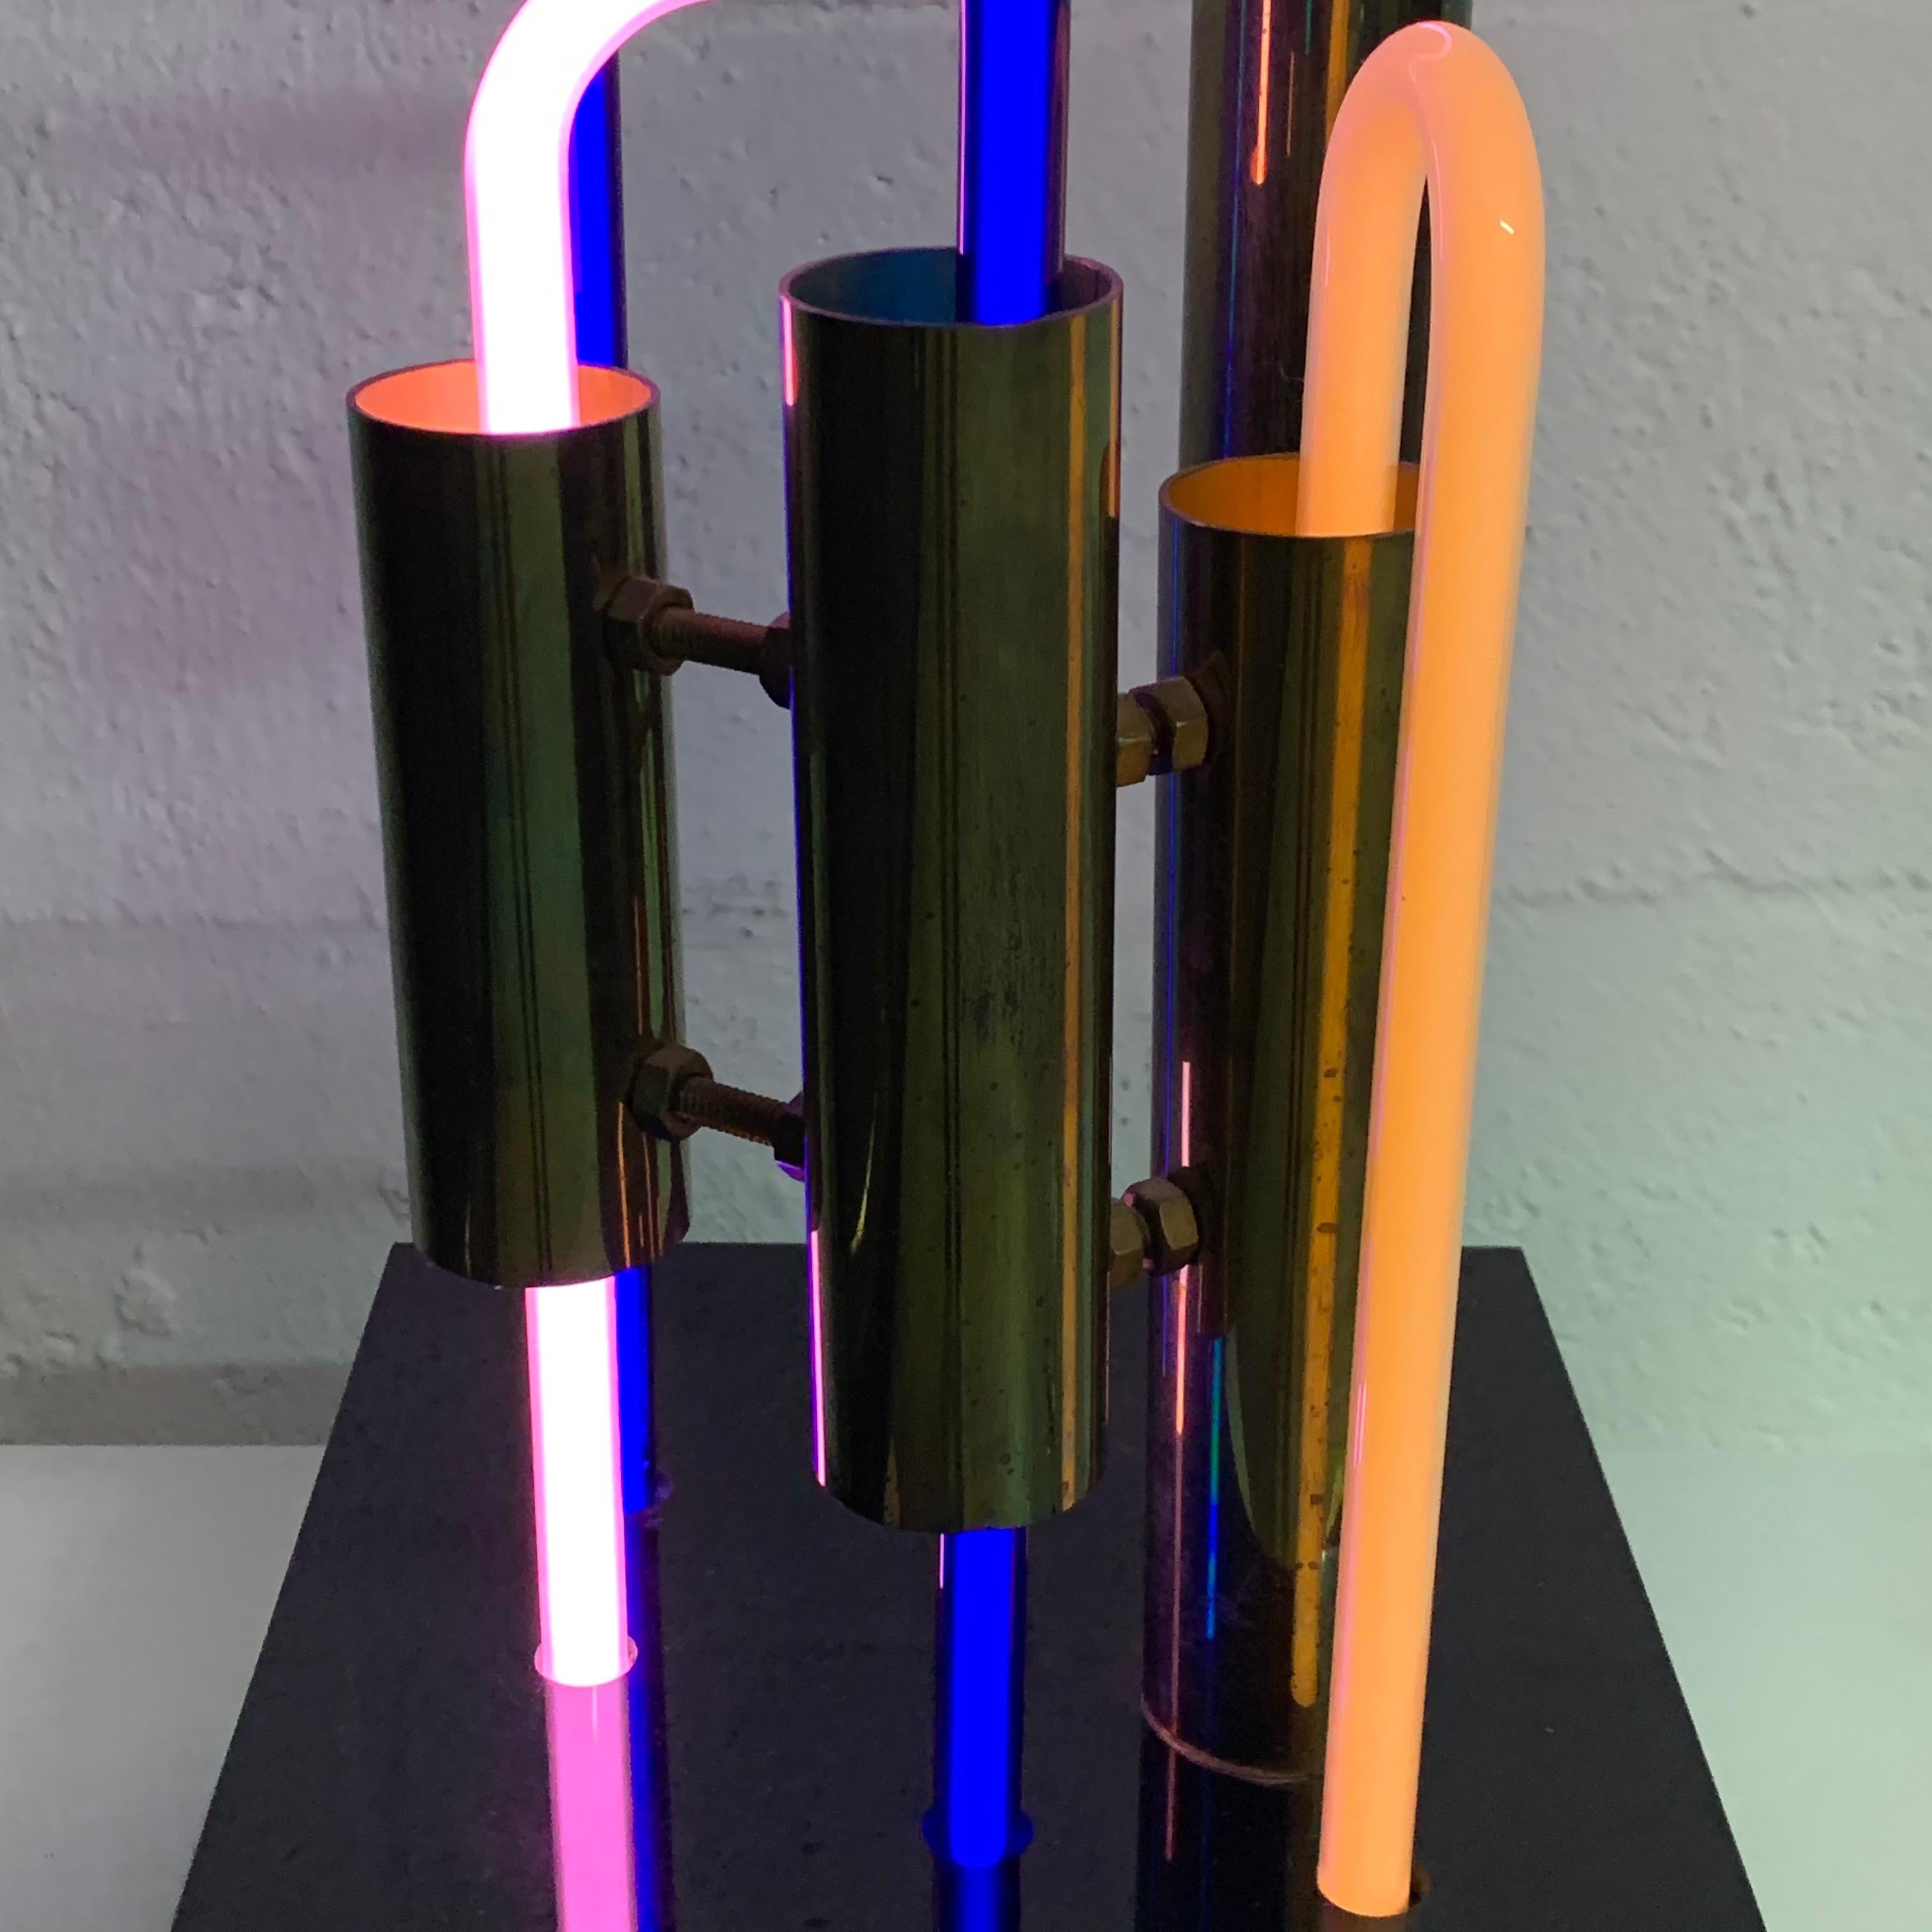 Plexiglass VCK, ALS #3 Neon Brass and Lucite Sculpture Lamp, Signed, 1985